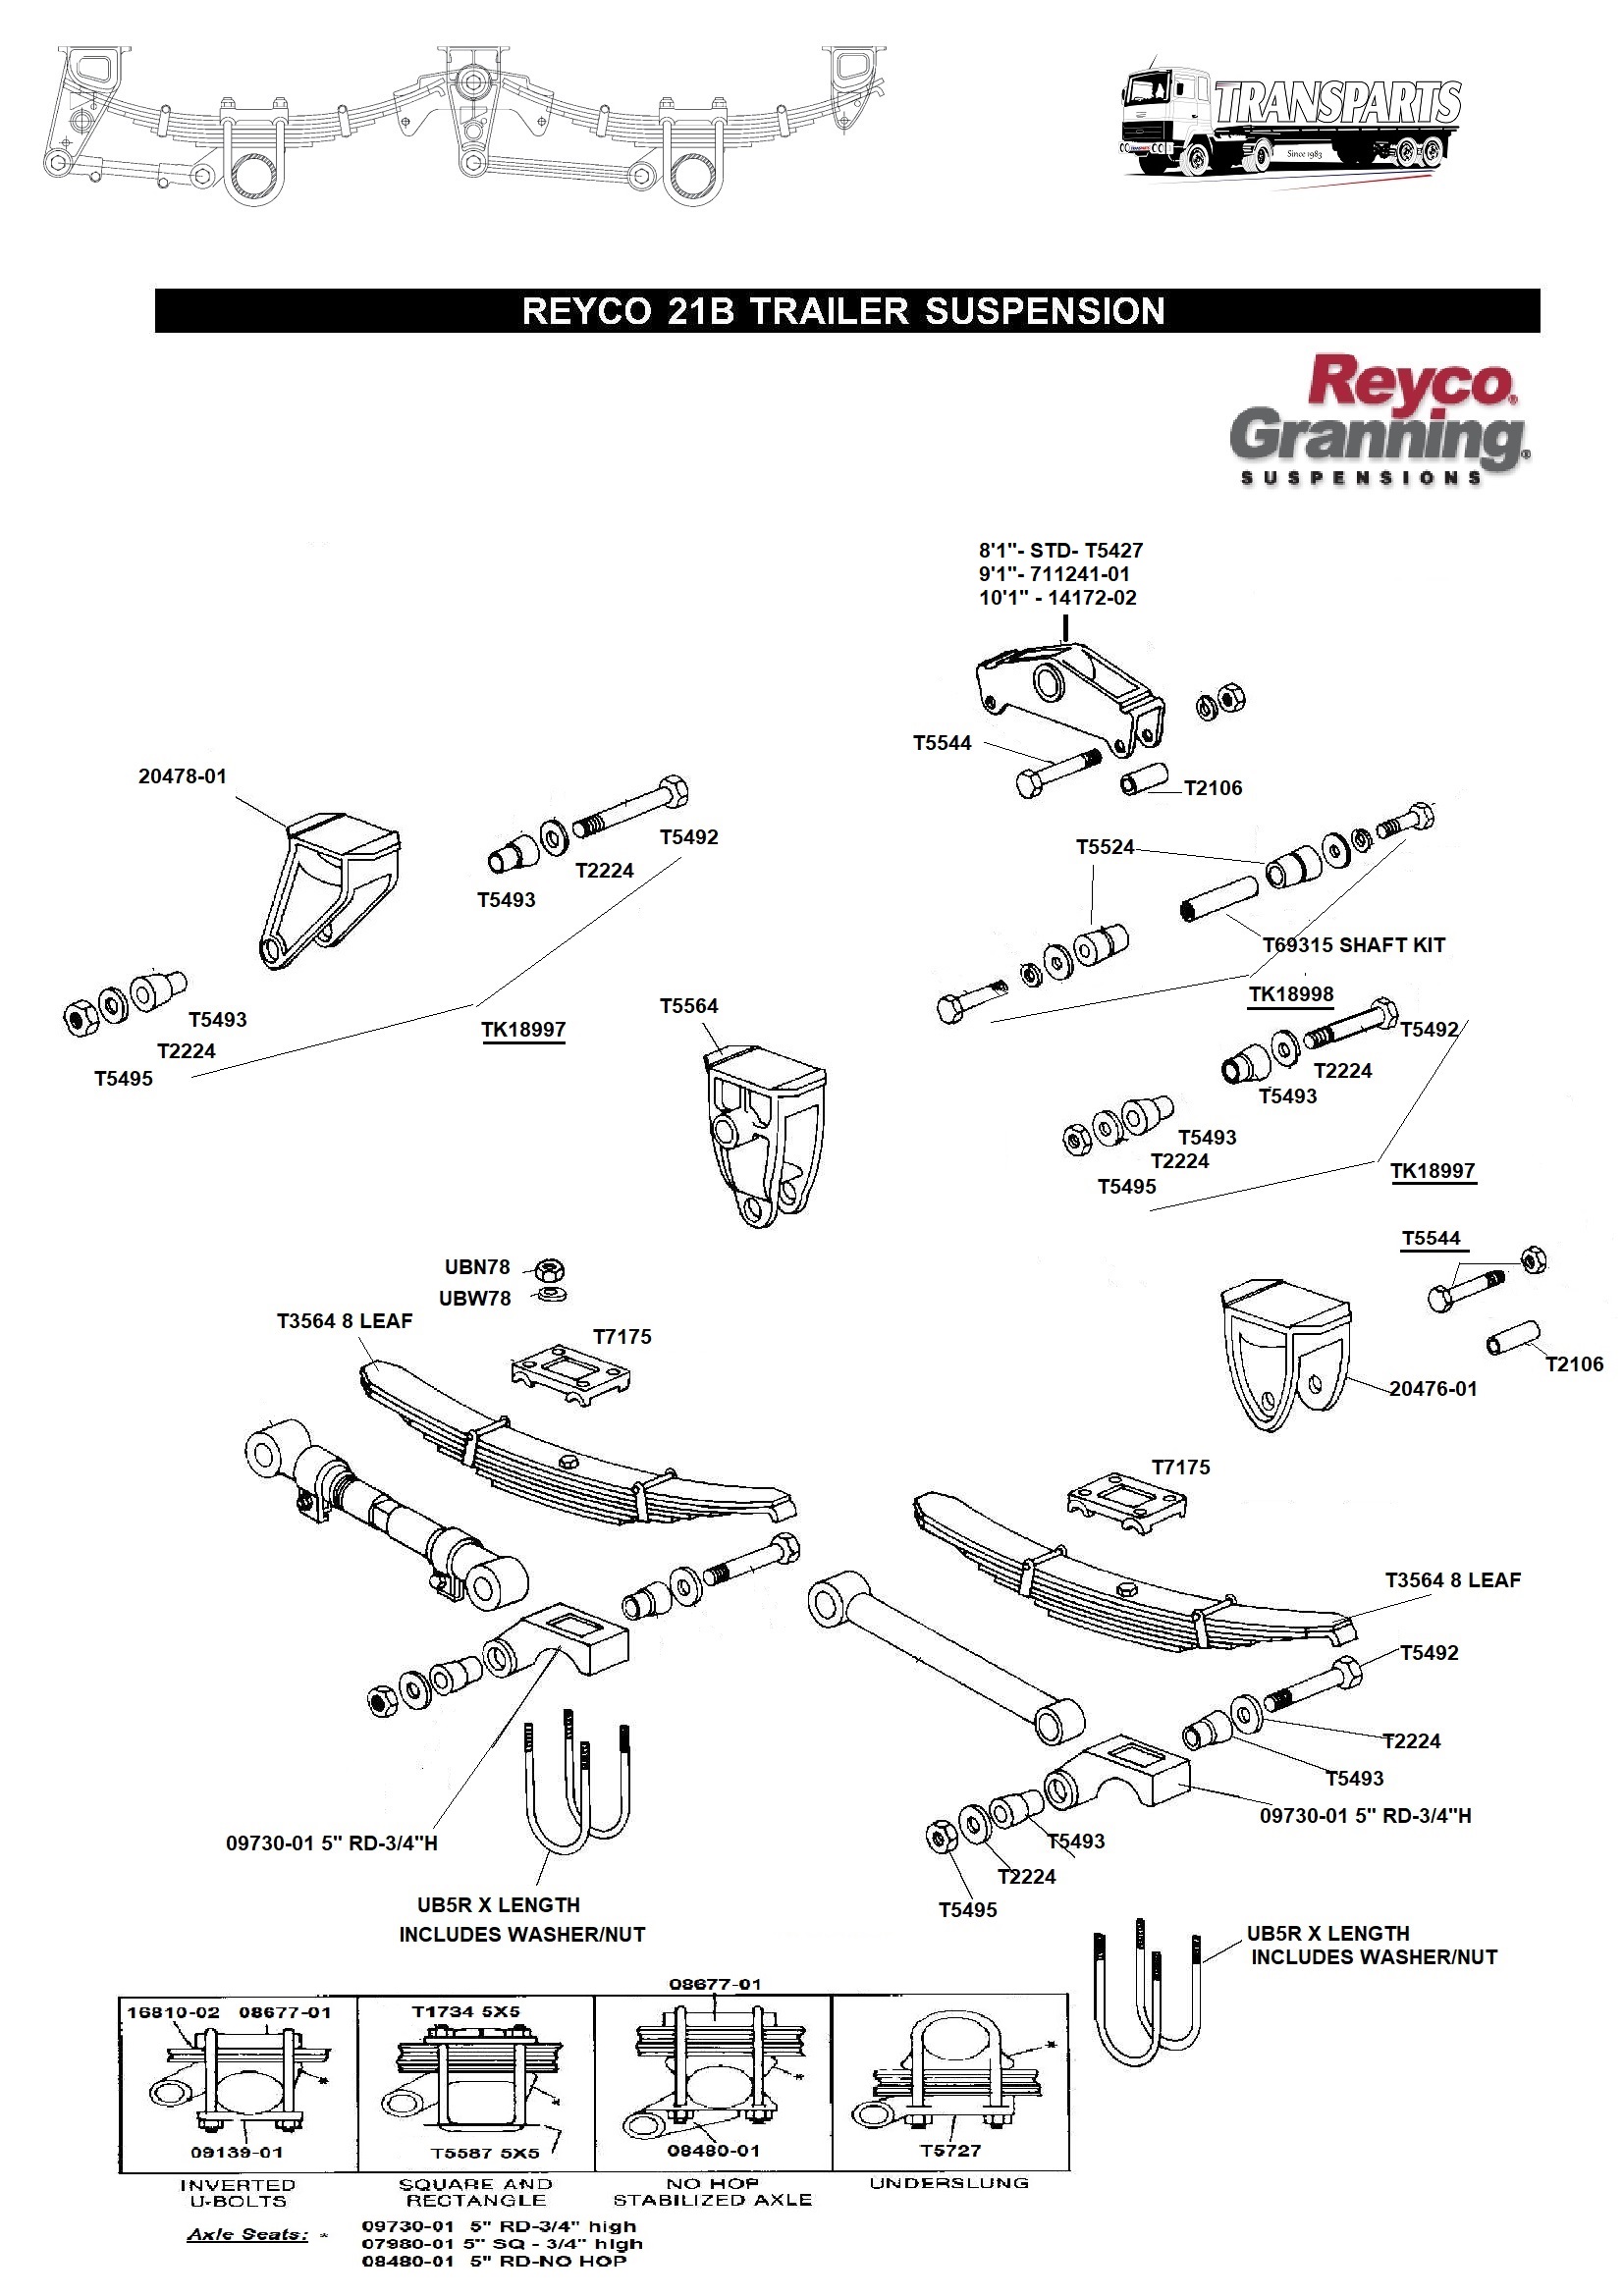 Reyco | Transparts QLD Pty Ltd